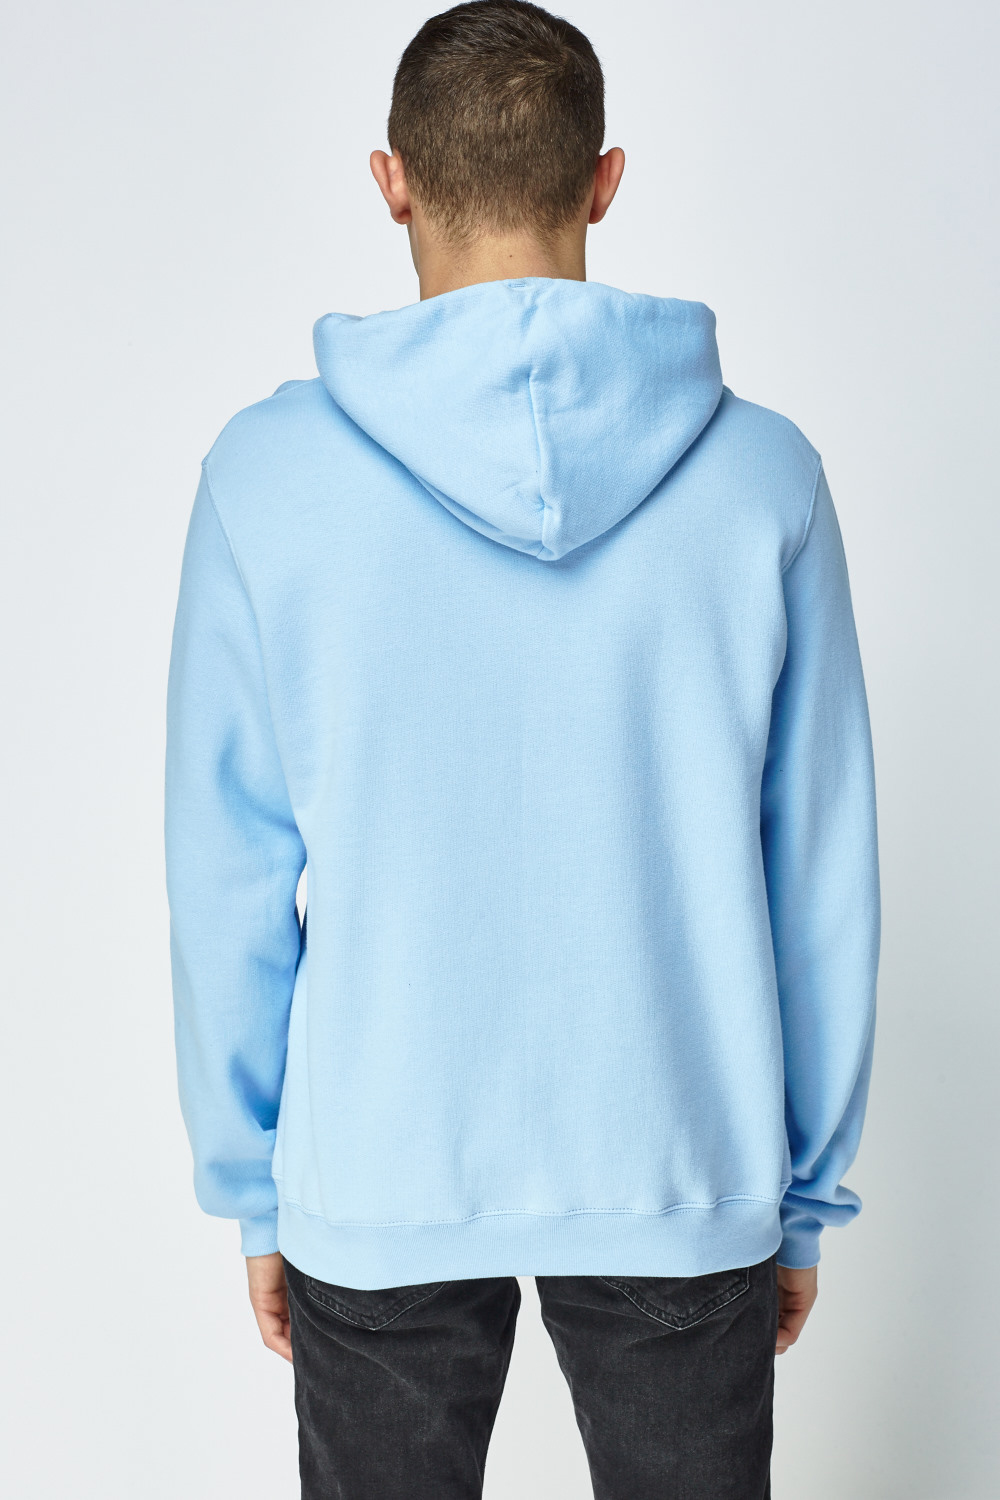 light blue sweatshirt sweatpant set